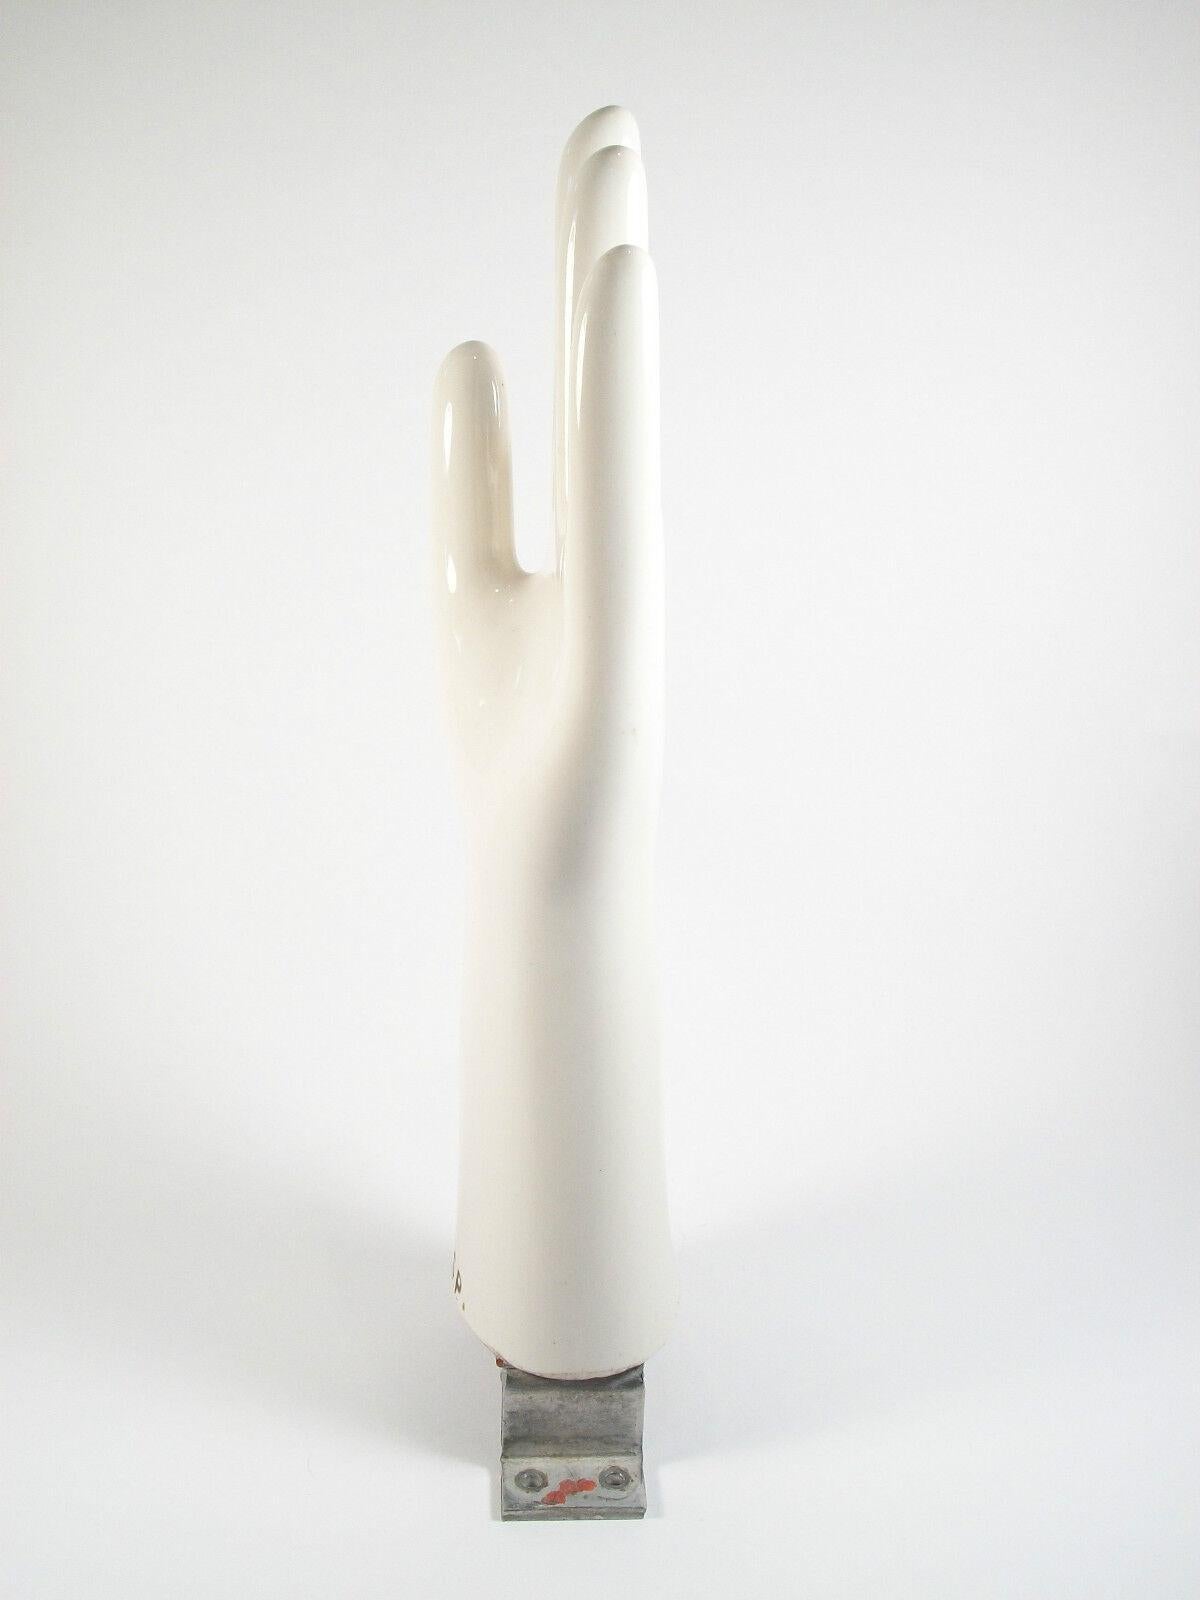 Antique Ceramic Industrial Glove Mold - U.S. - Late 19th Century For Sale 2